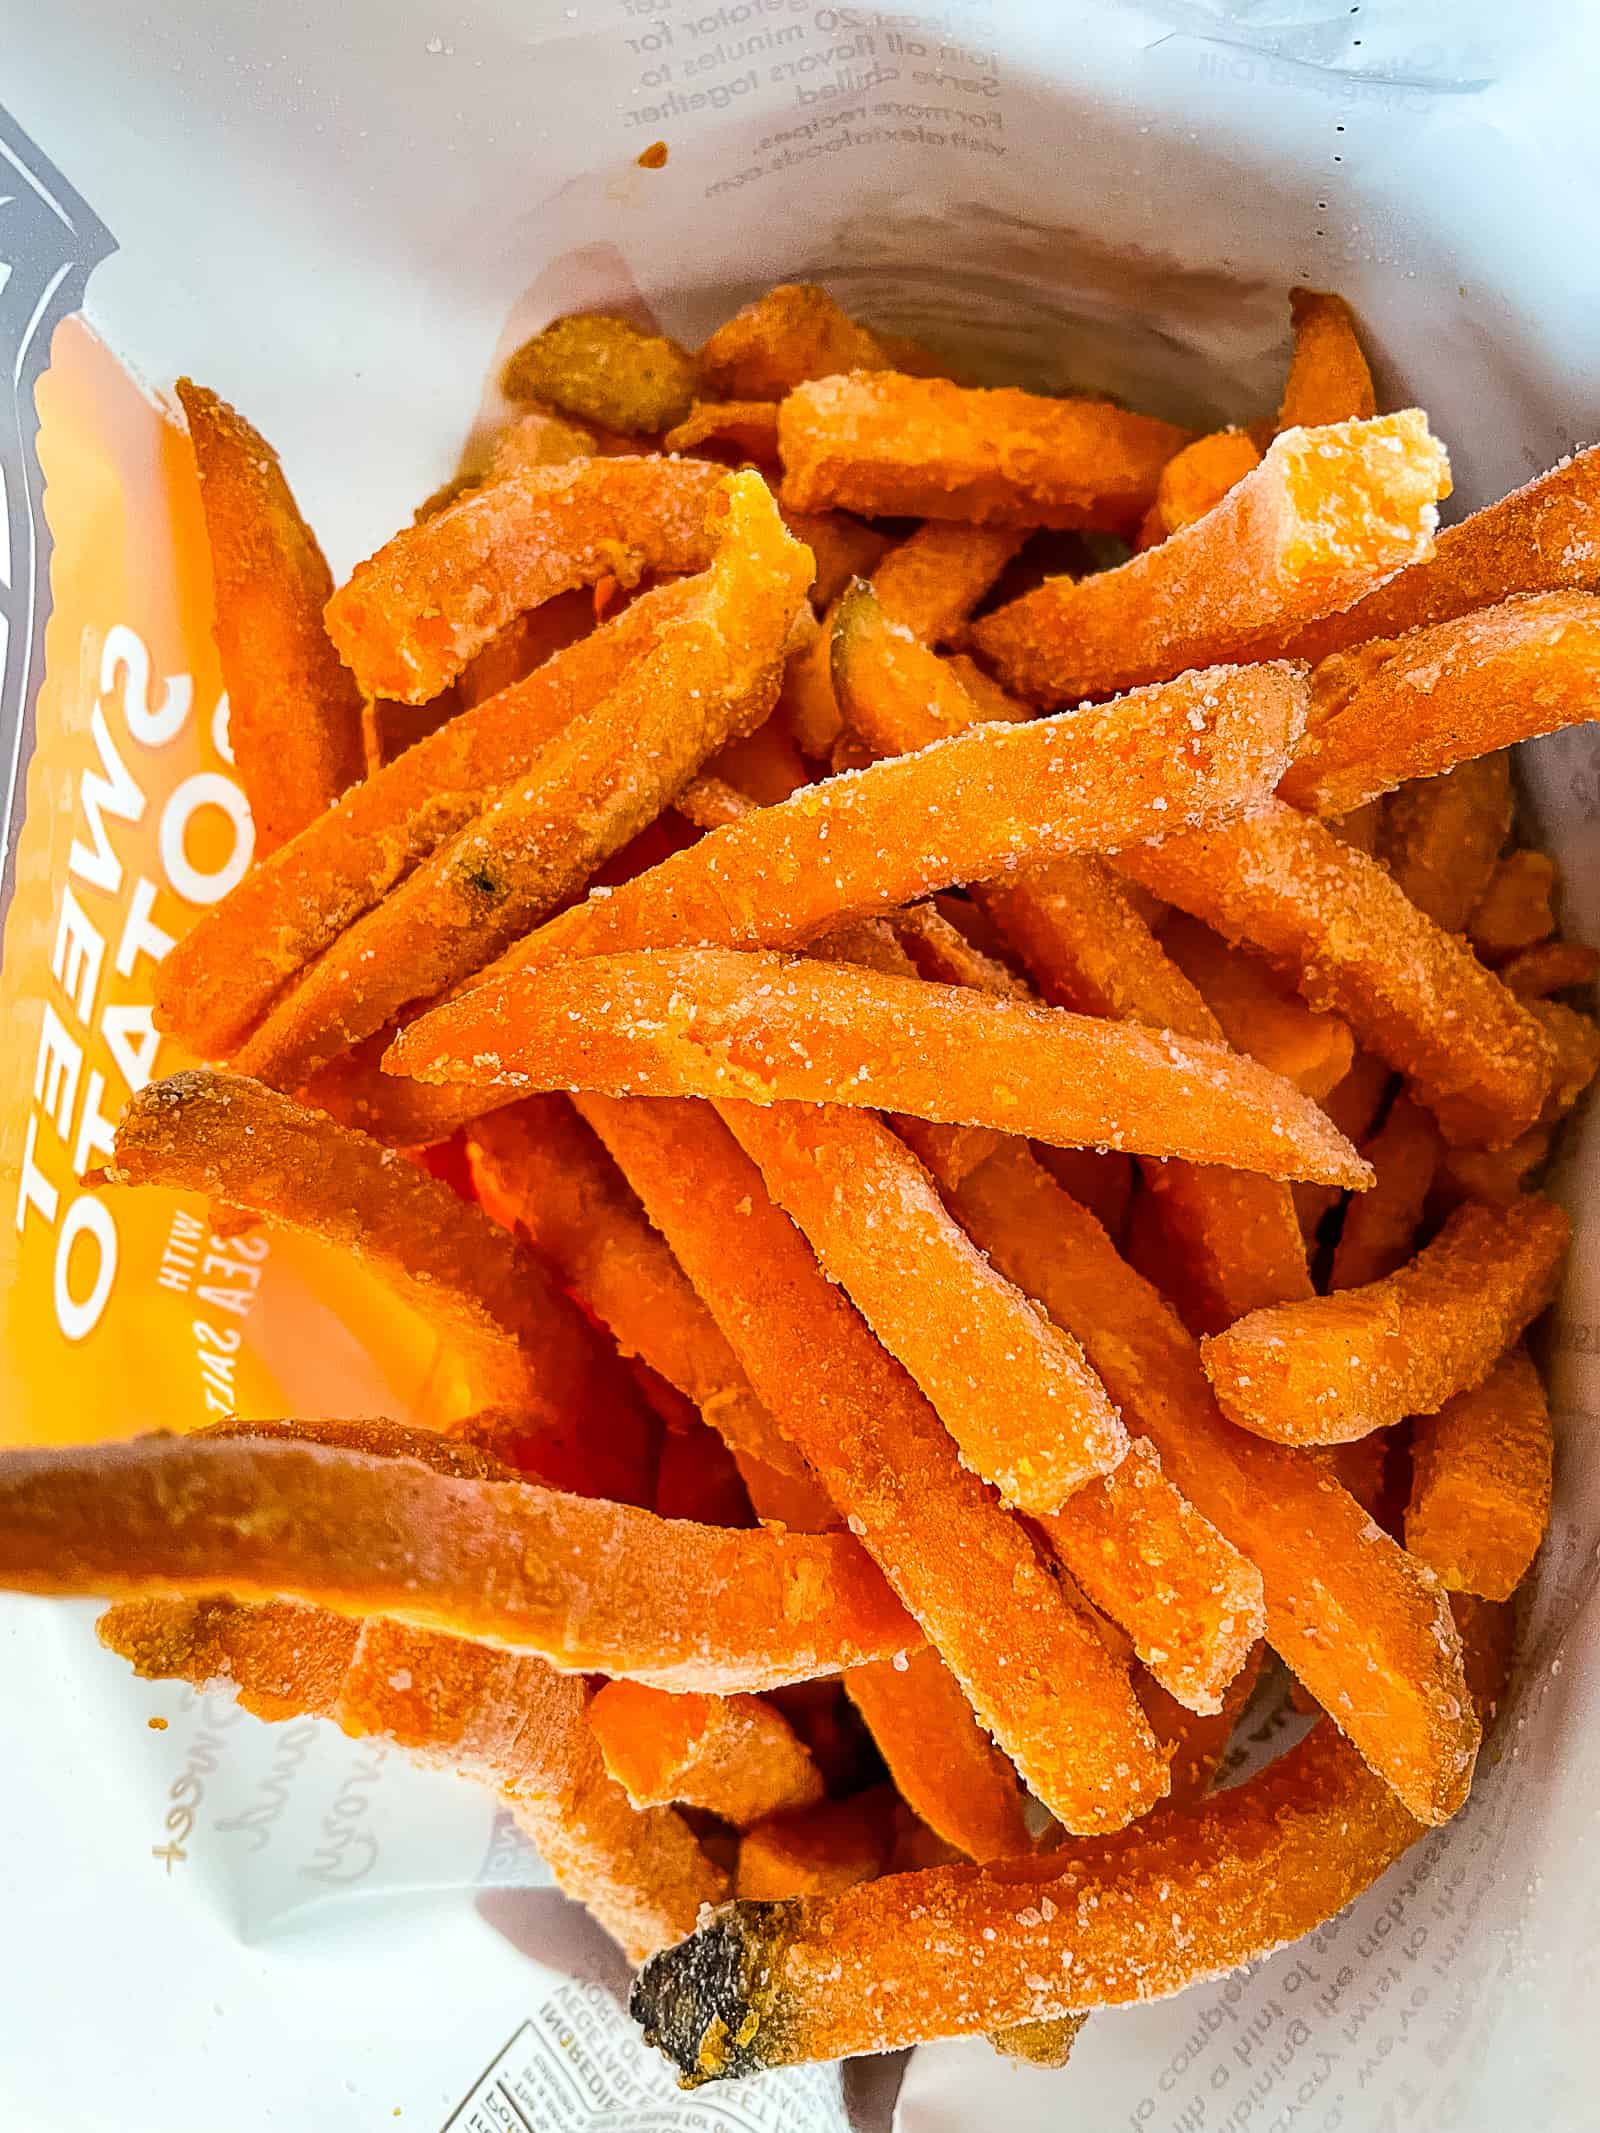 Frozen sweet potato fries in the bag.